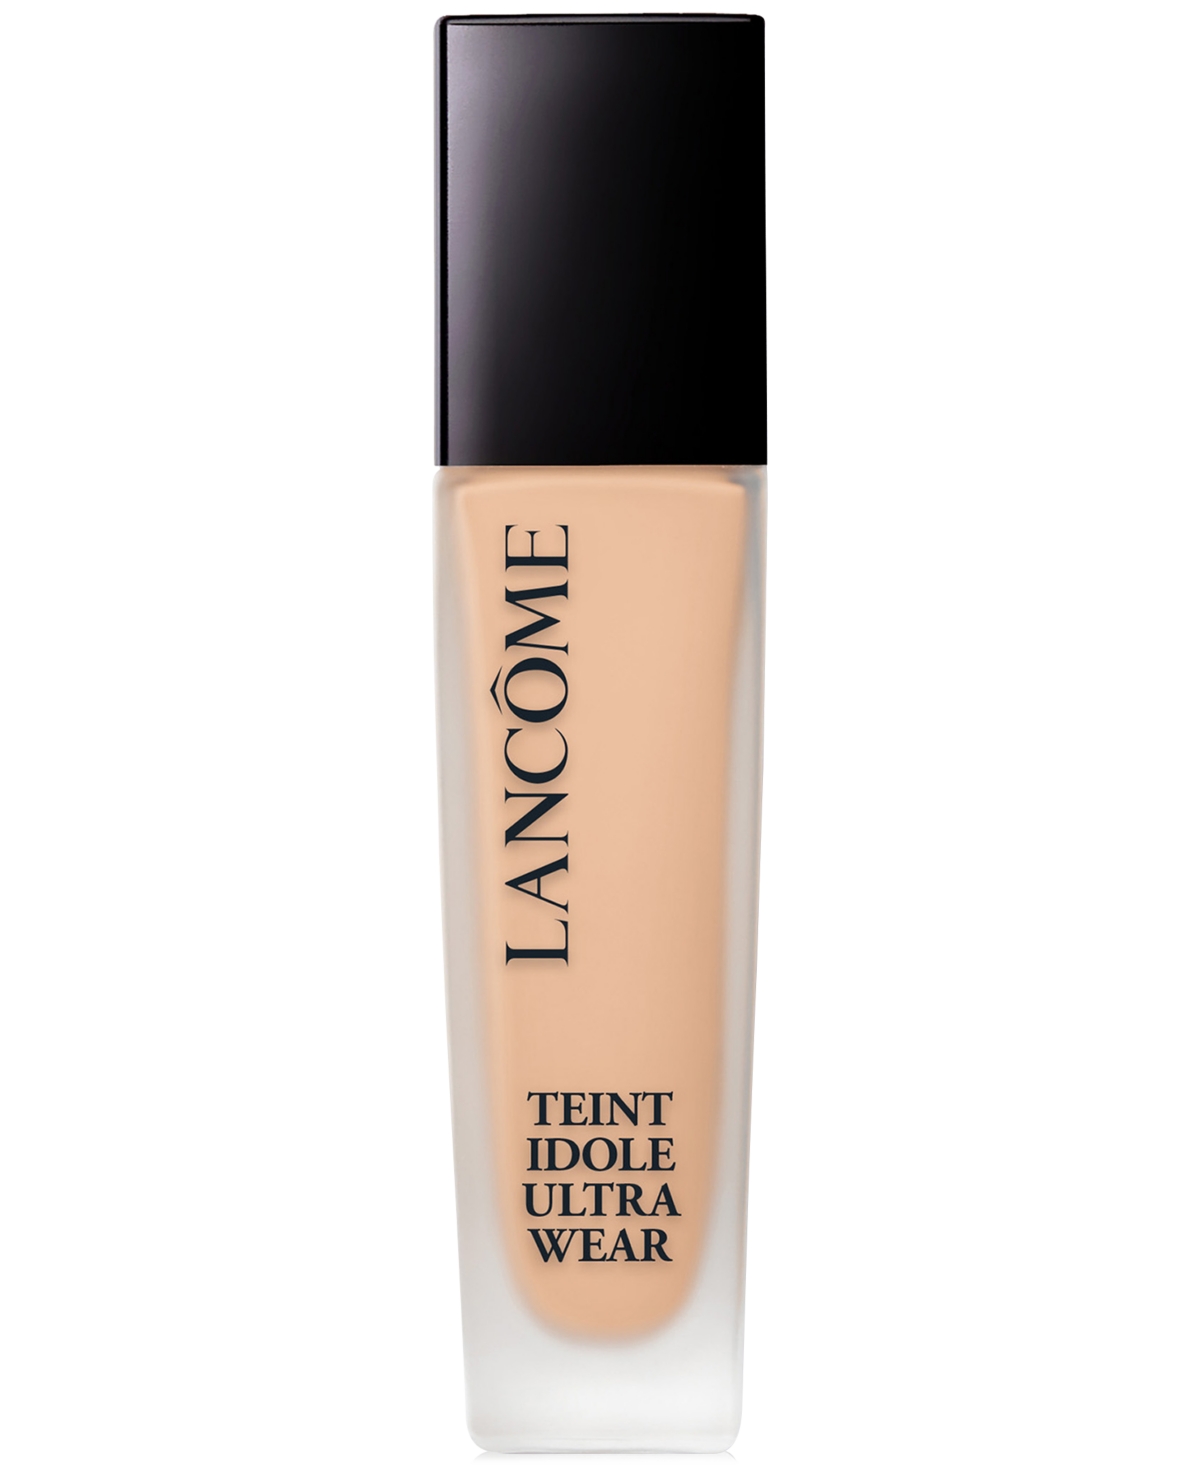 Lancôme Teint Idole Ultra Wear Foundation In C - Fair Skin With Cool,pinky Undertones